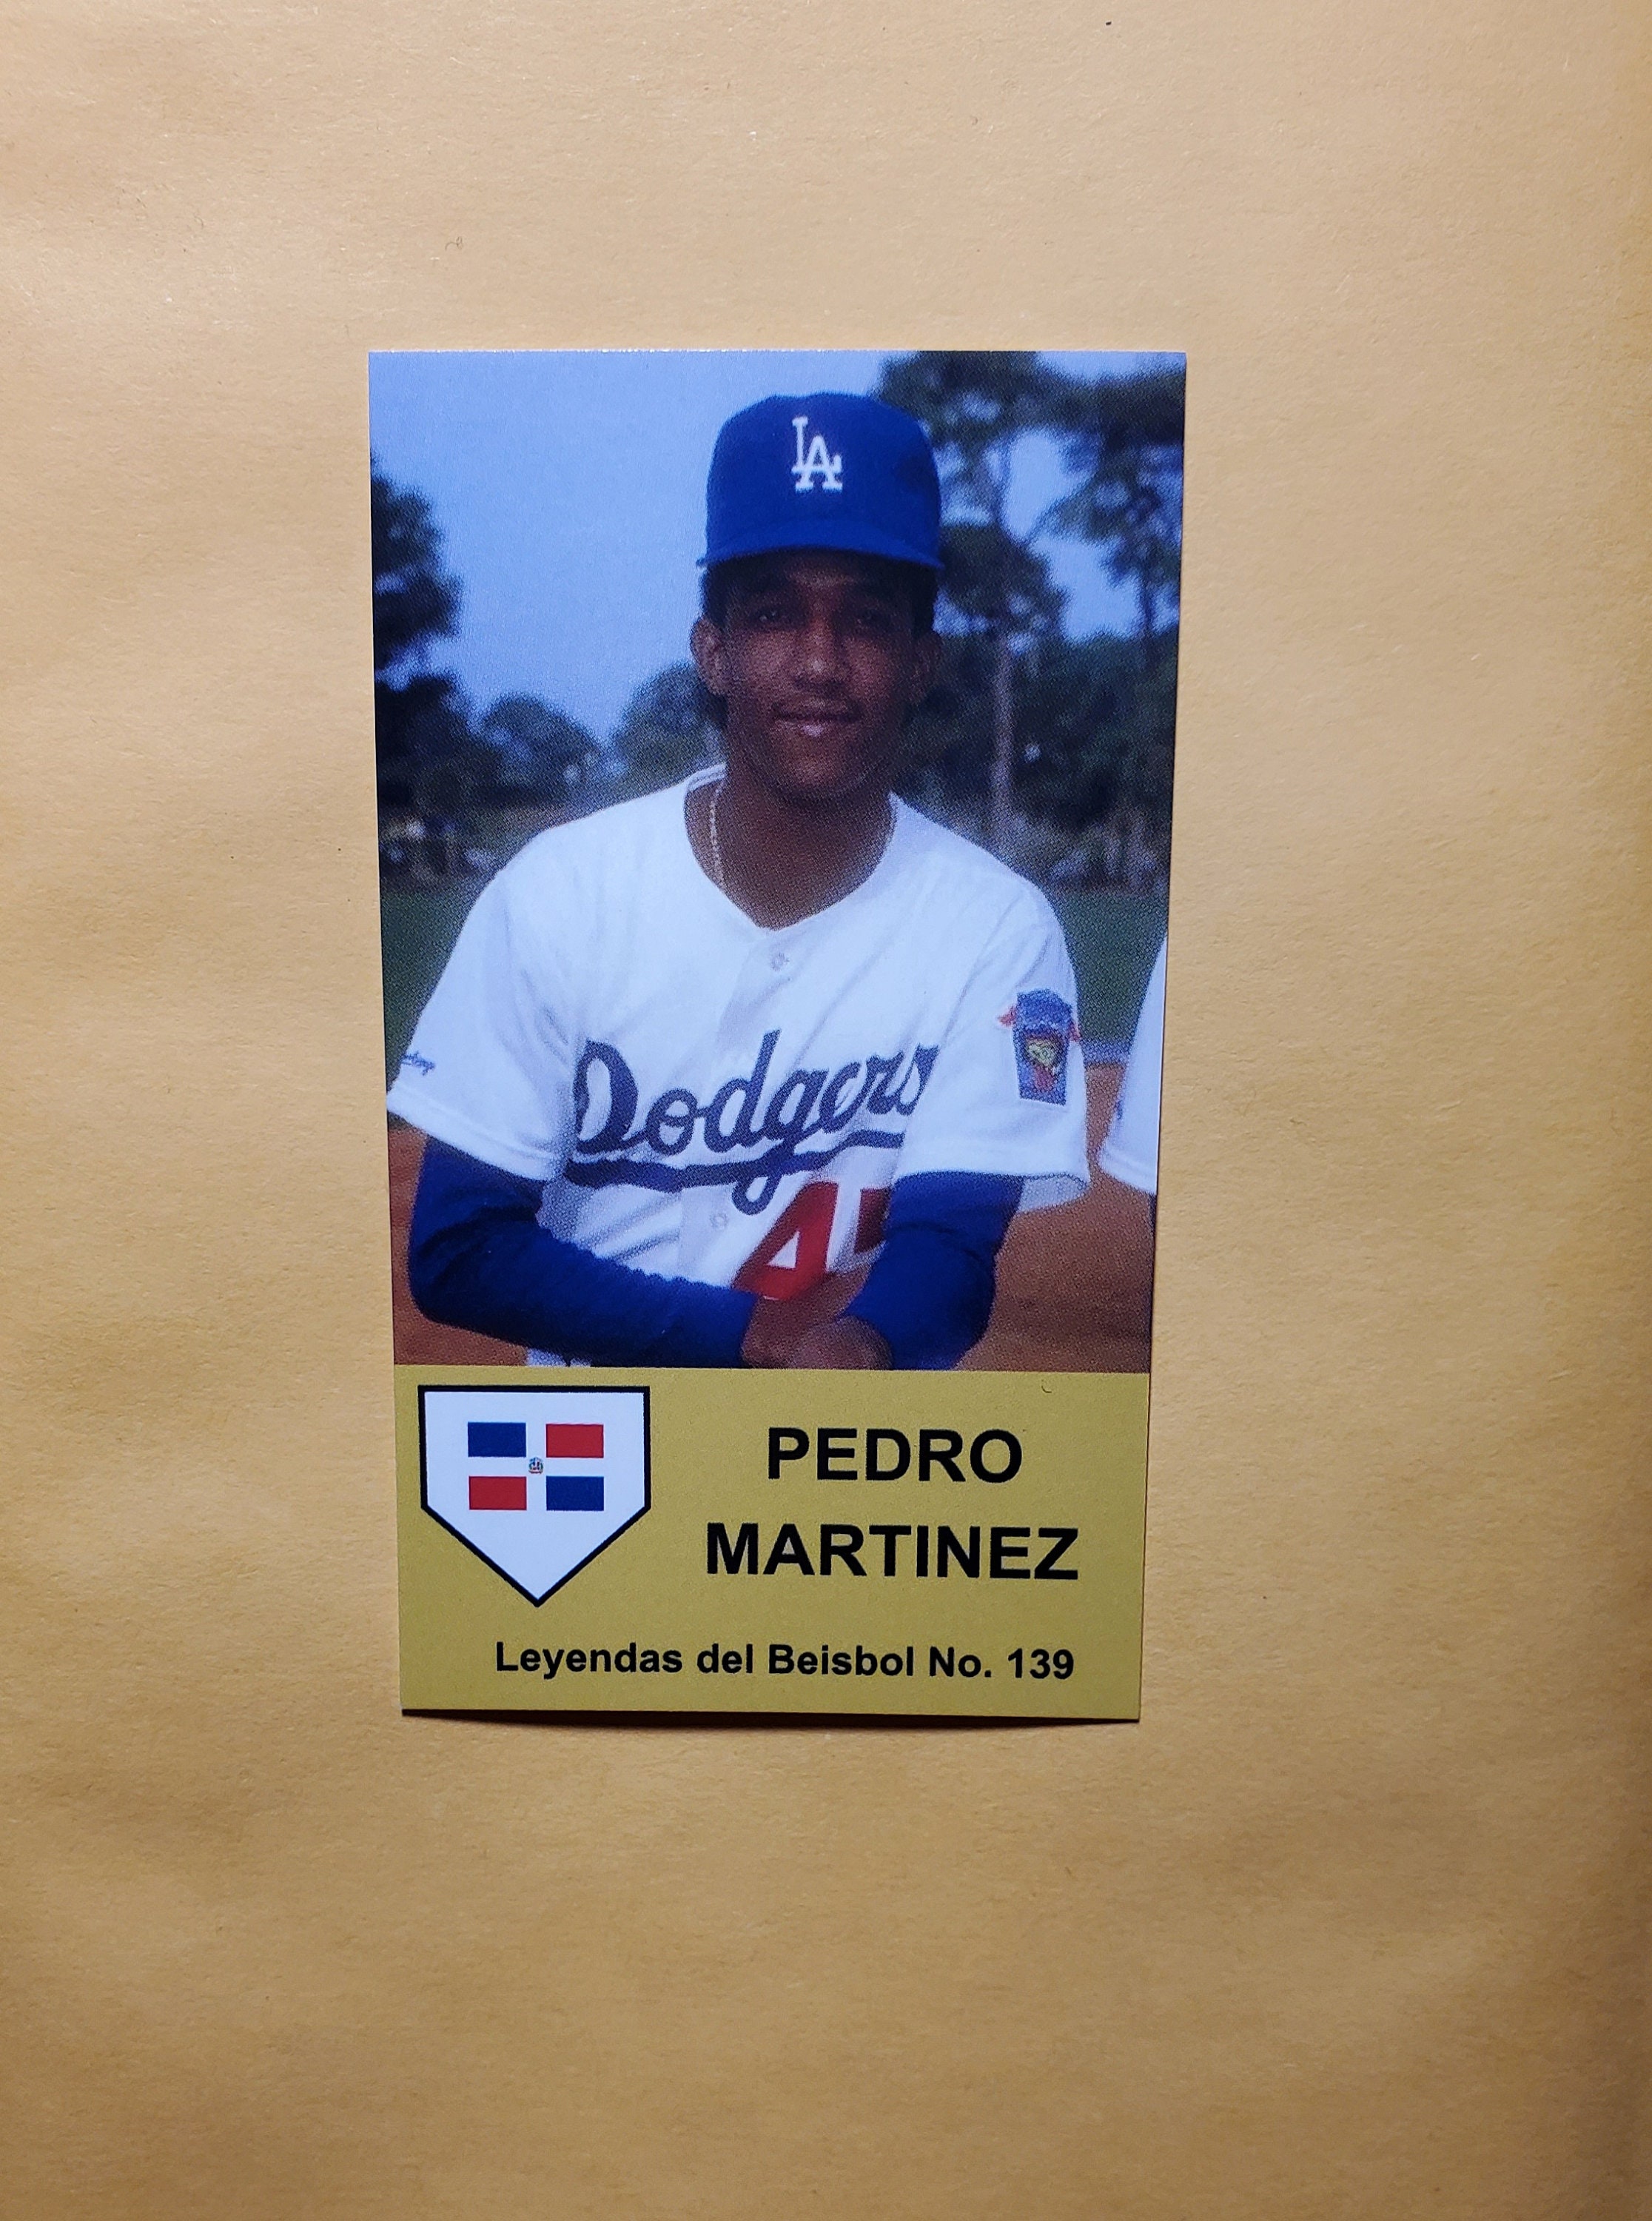 Men's Los Angeles Dodgers #45 Pedro Martinez White Jersey on sale